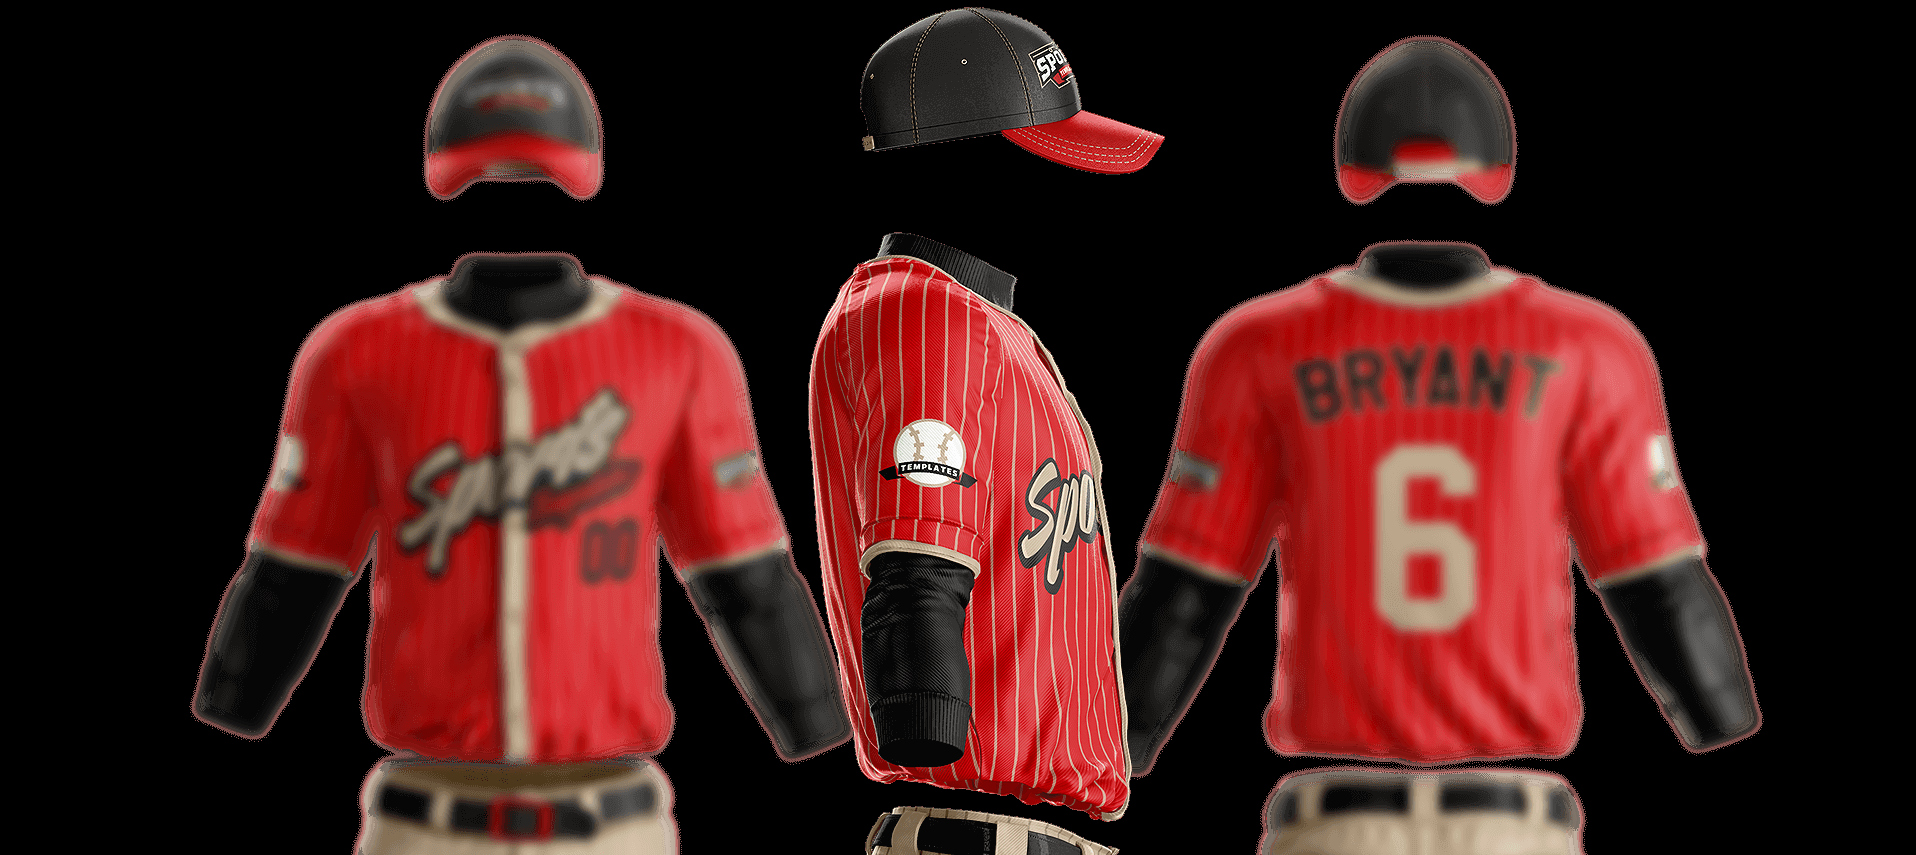 Baseball Uniform order form Template Best Of Design Your Own Baseball Uniform Black Lesbiens Fucking